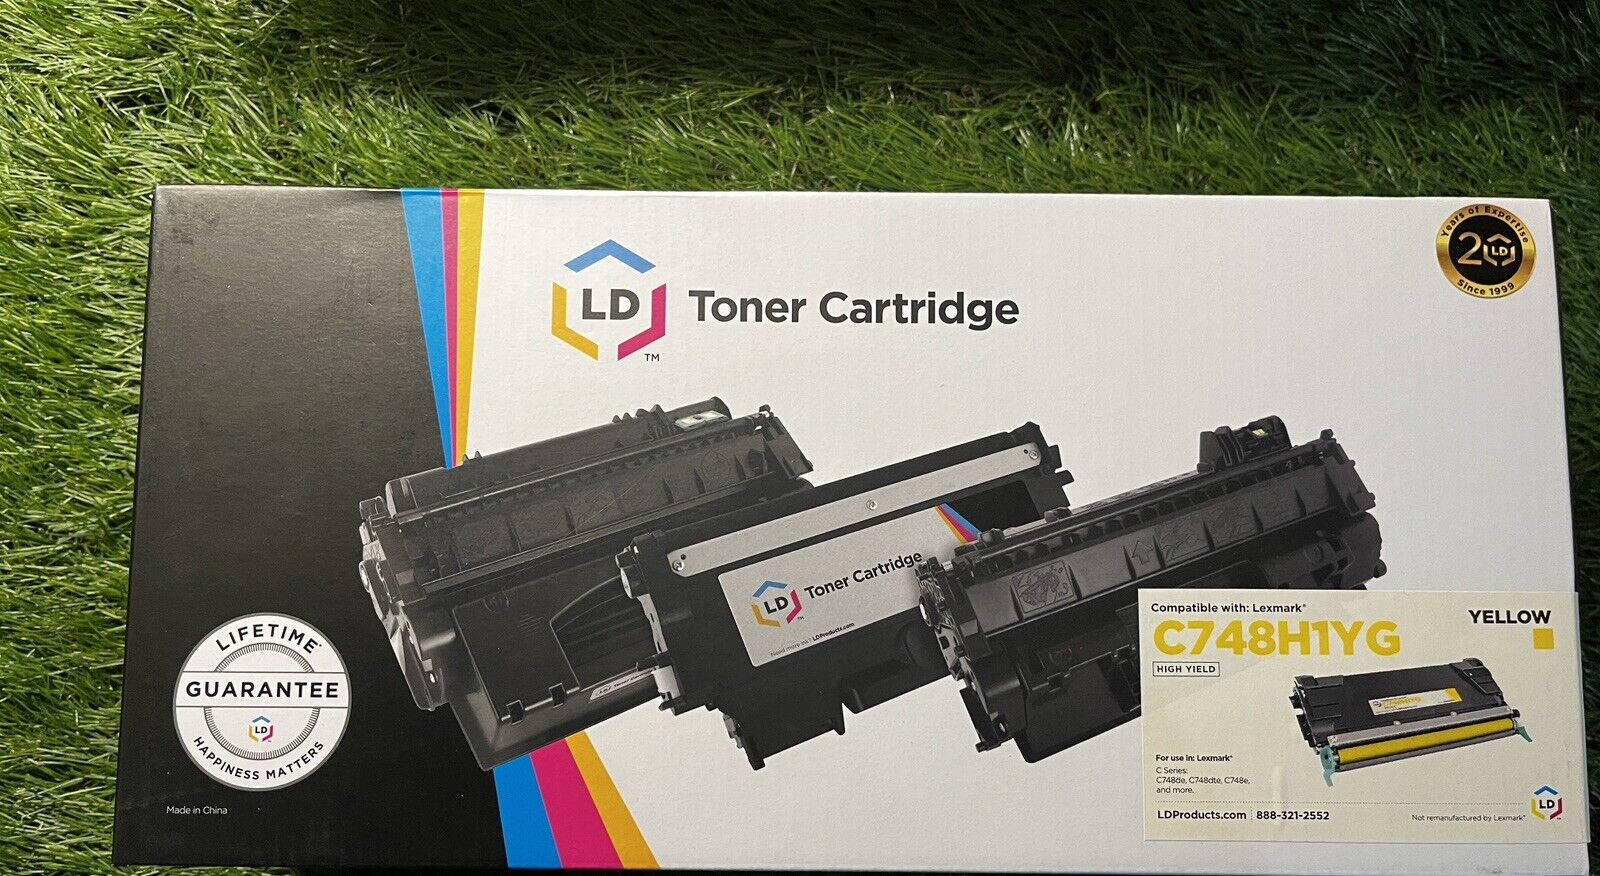 LD Toner Cartridge For Lexmark Yellow C748H1YG Brand New